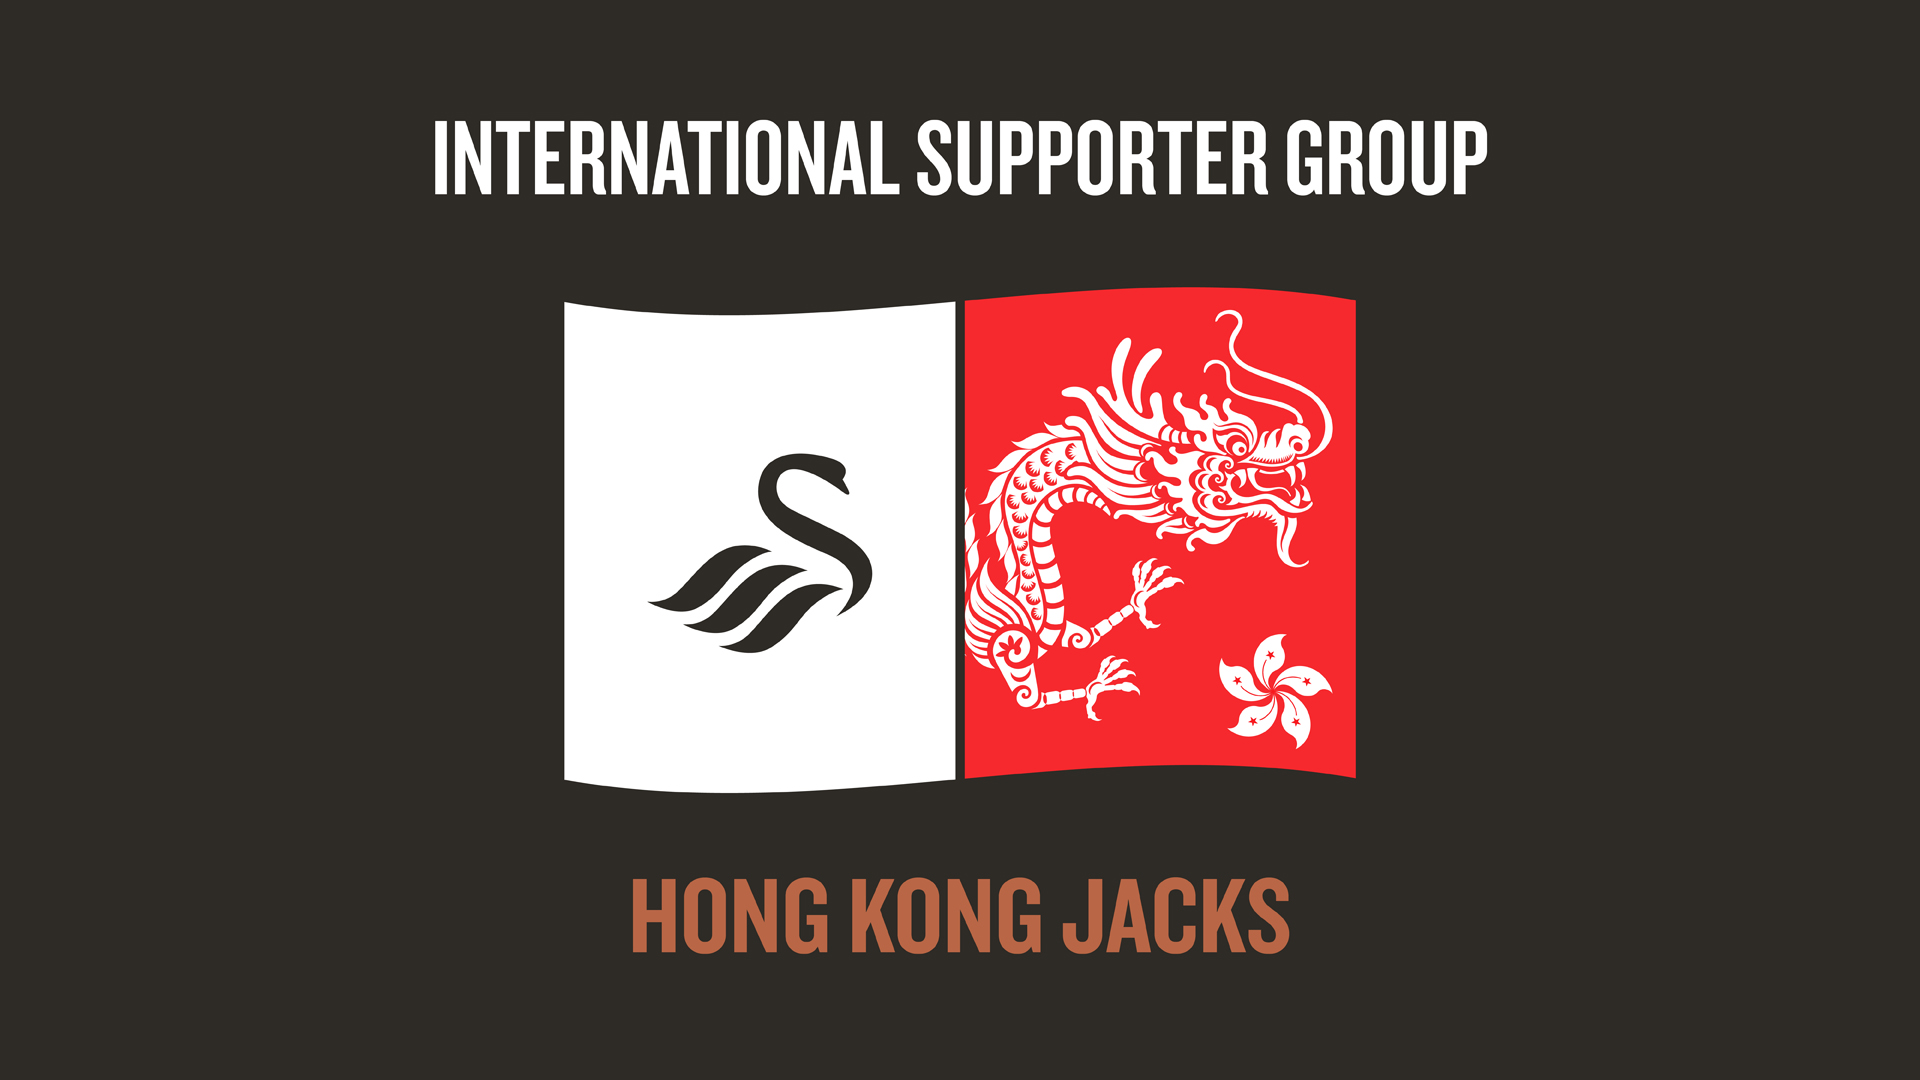 Hong Kong Jacks